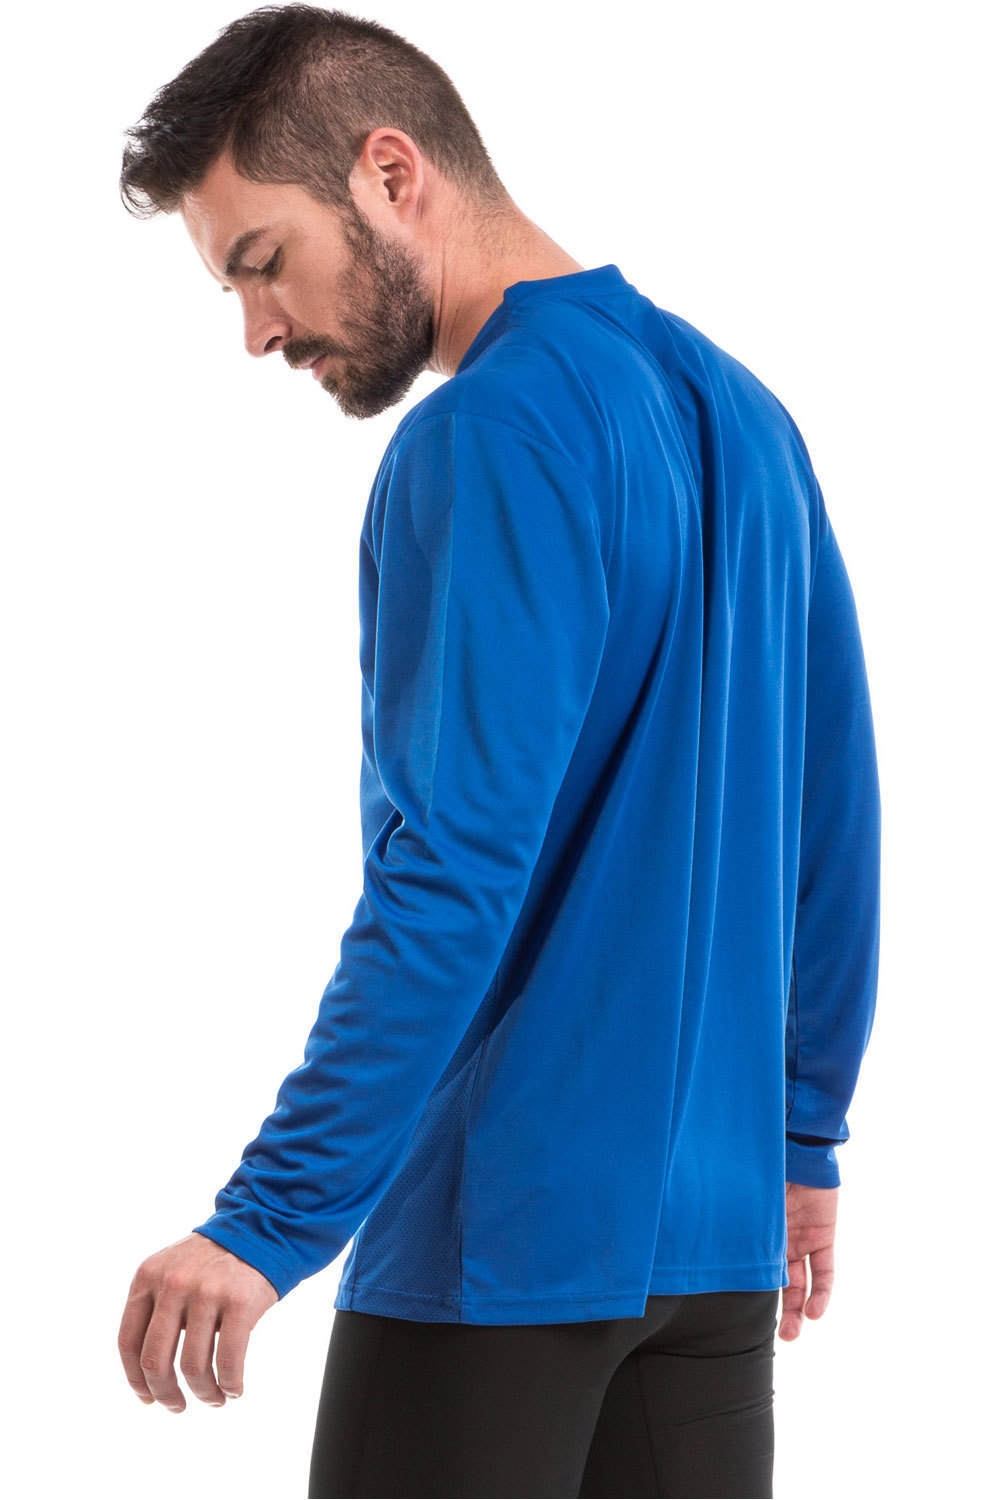 4team camisetas fútbol manga larga T-IBRA OLYMPIA BLUE vista trasera